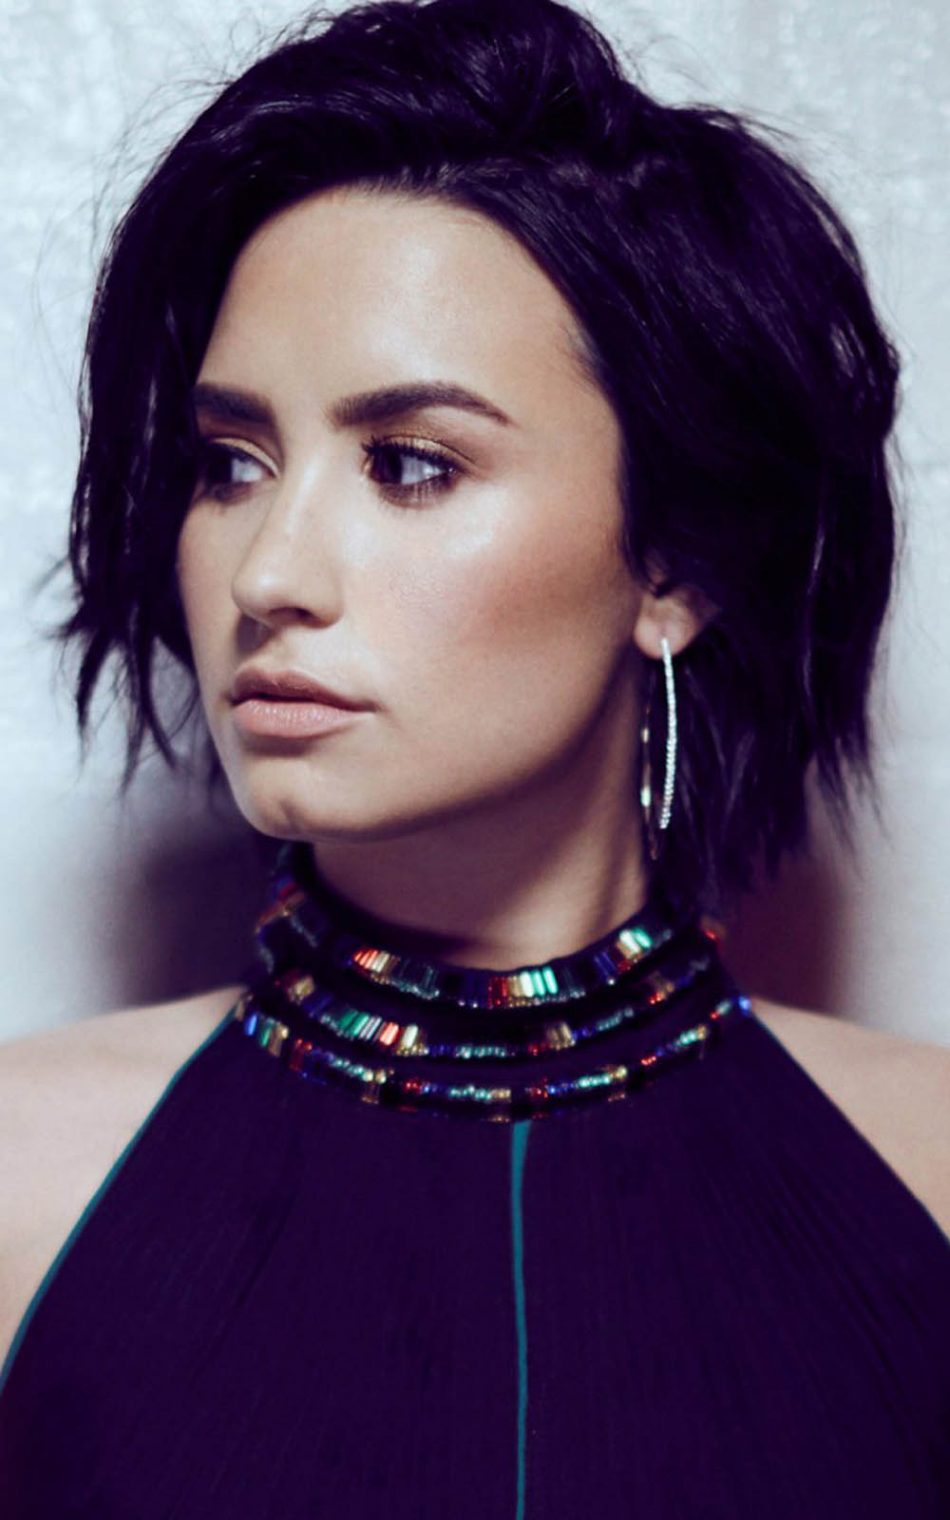 Demi Lovato 2017 New Photoshoot 4K Ultra HD Mobile Wallpaper